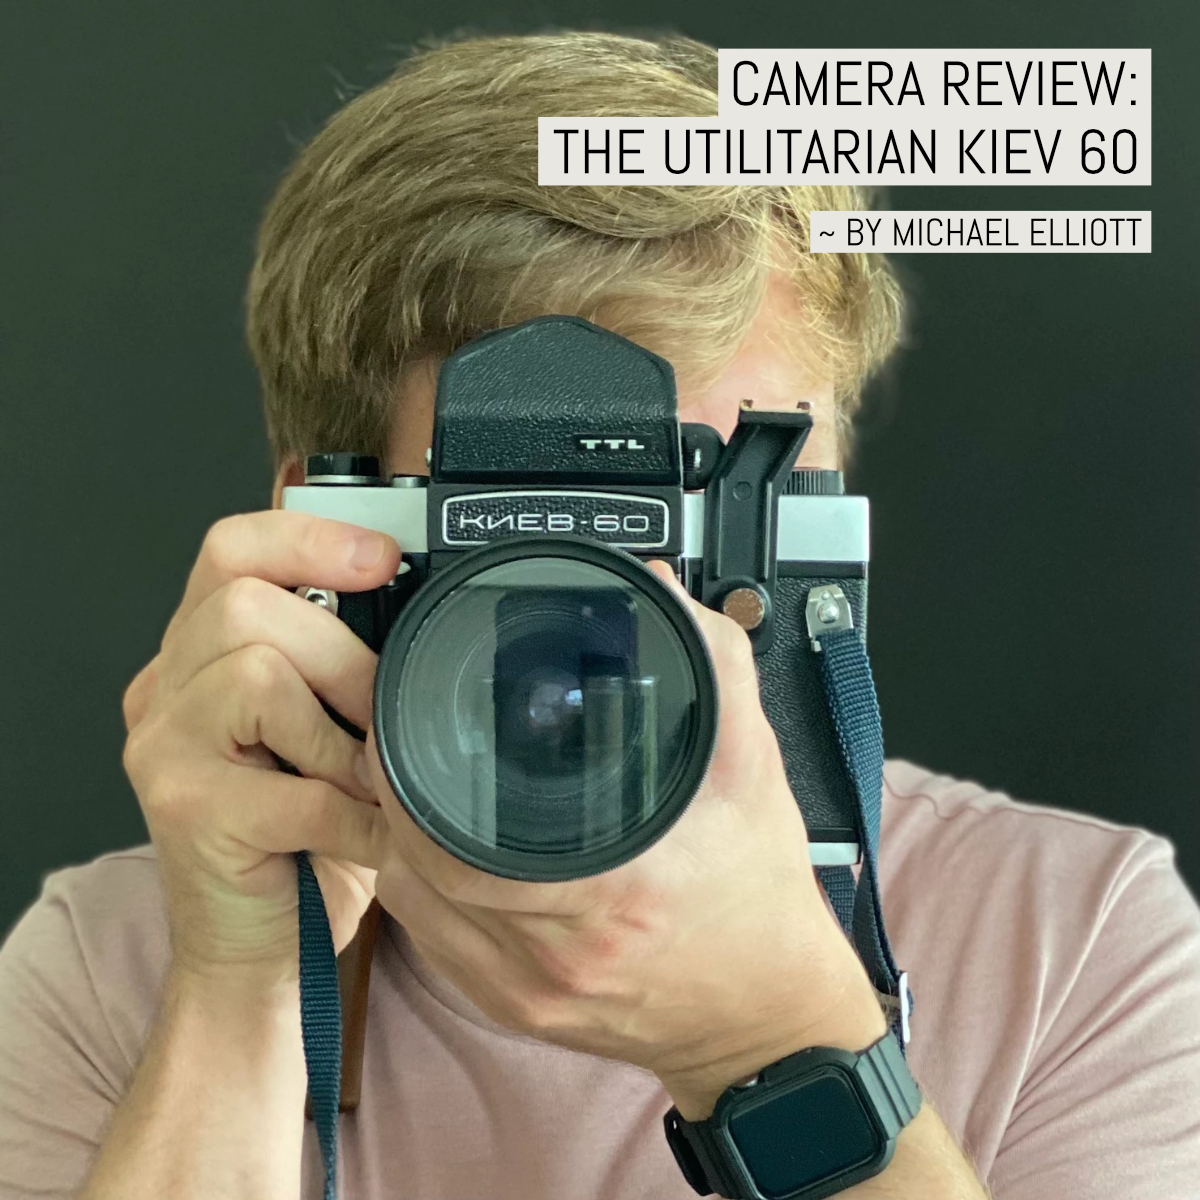 Camera review: The utilitarian Kiev 60